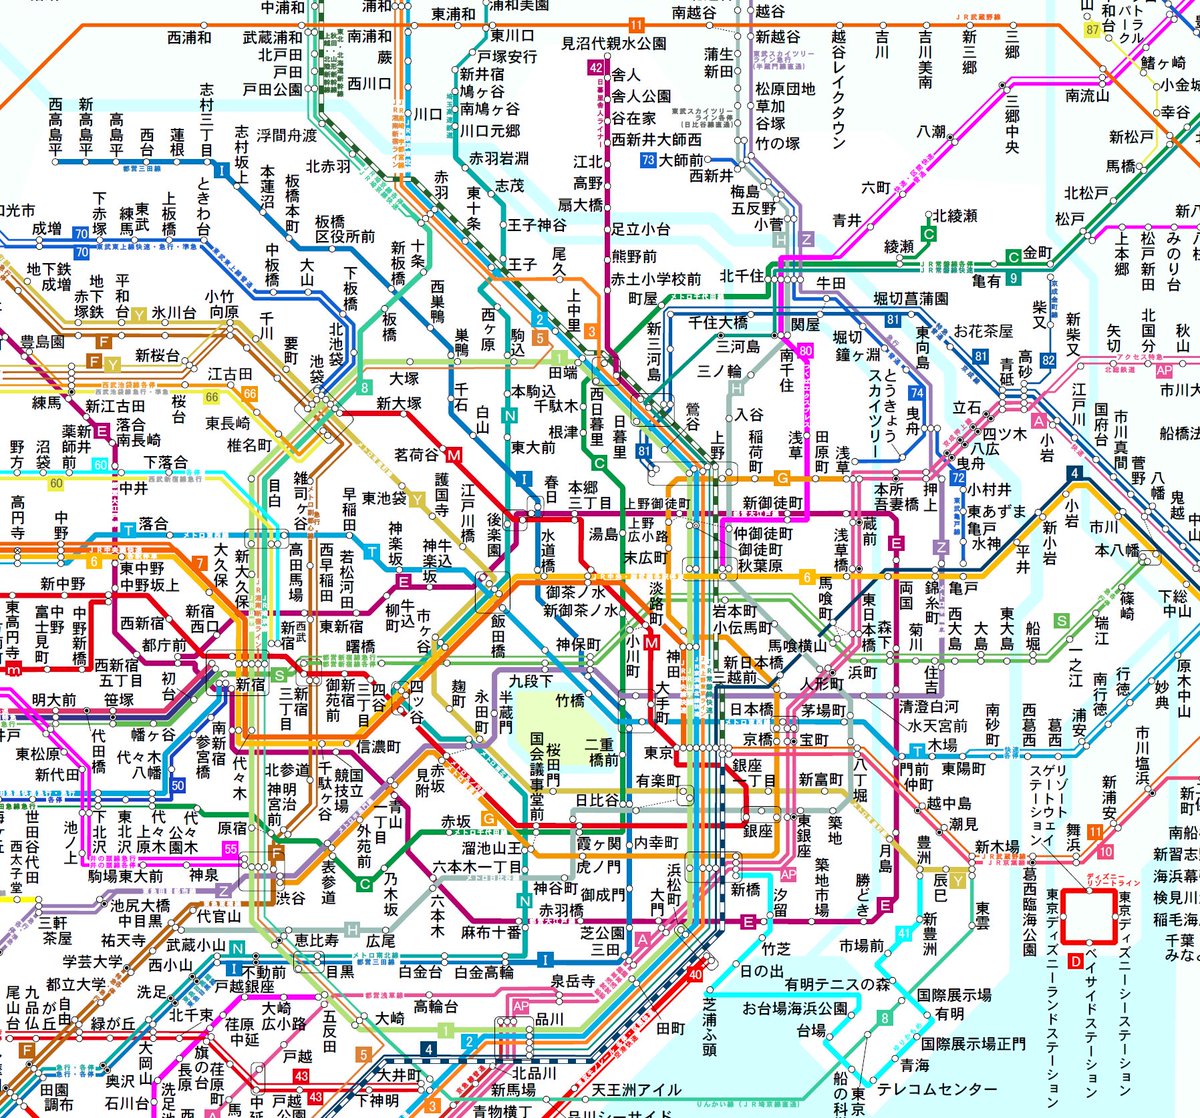 Yukai3chome V Twitter Bus Service Mapでは東京23区周辺の鉄道路線